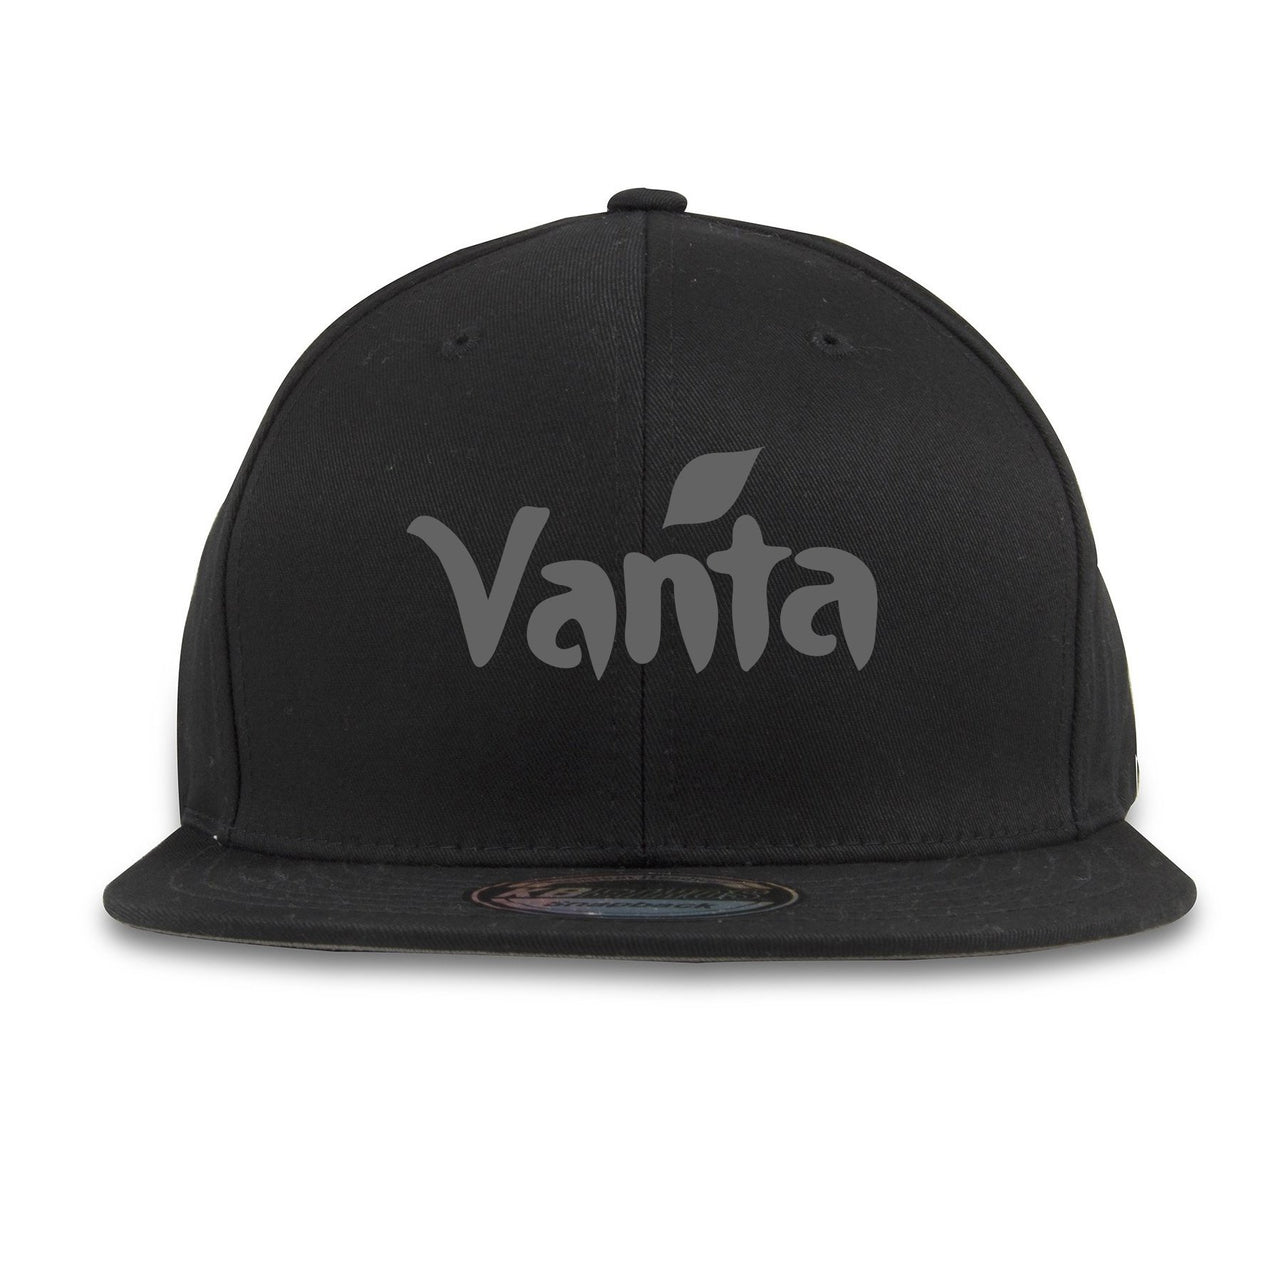 Vanta v2 700s Snapback | Vanta, Black